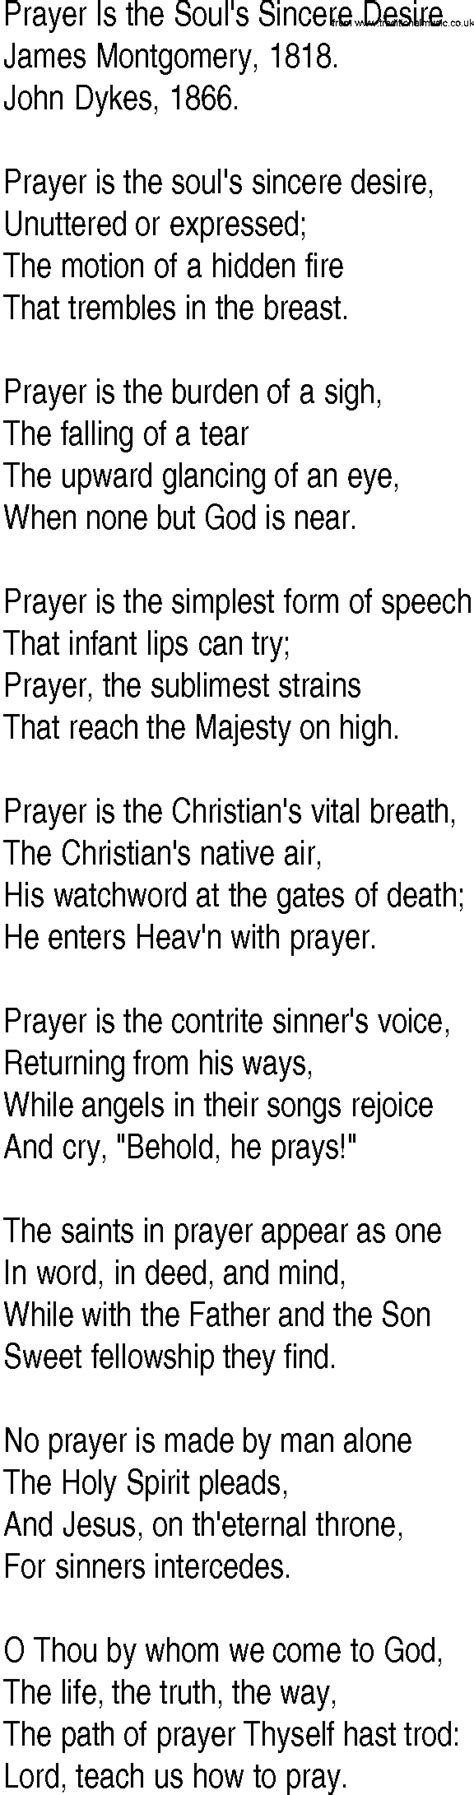 Hymn and Gospel Song Lyrics for Prayer Is the Soul